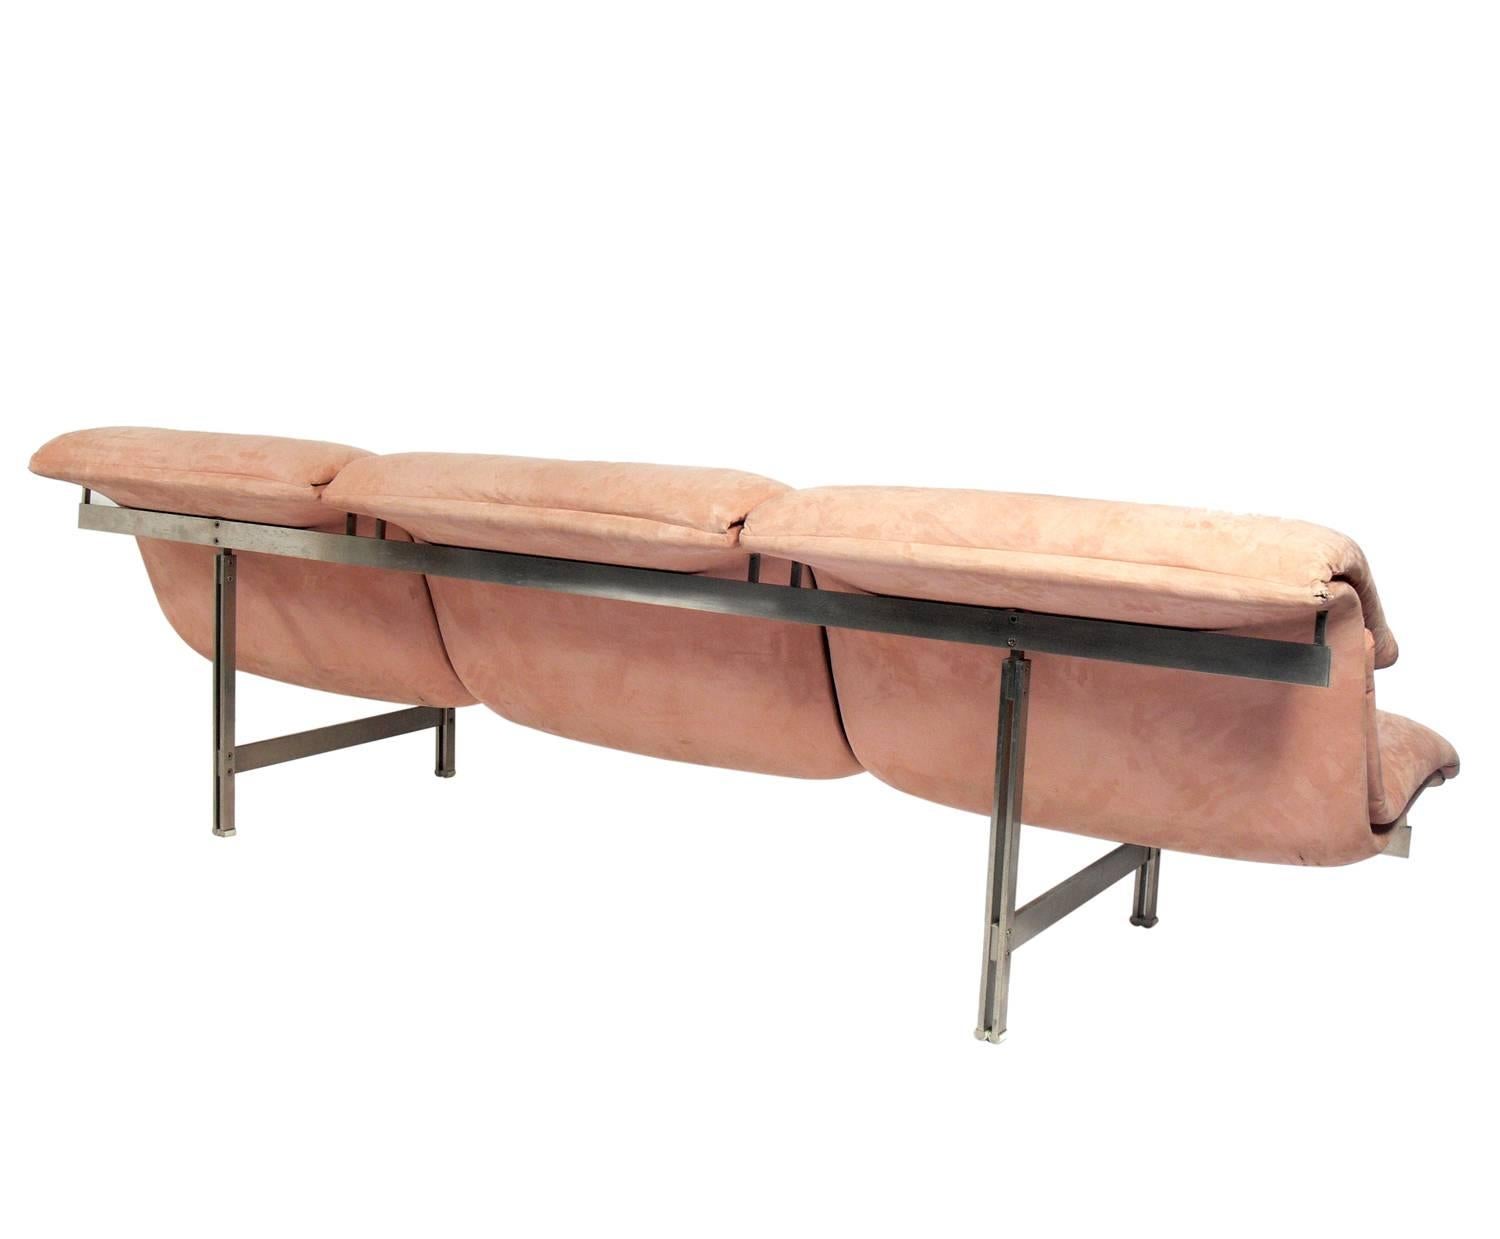 Metalwork Curvaceous Italian Sofa by Saporiti